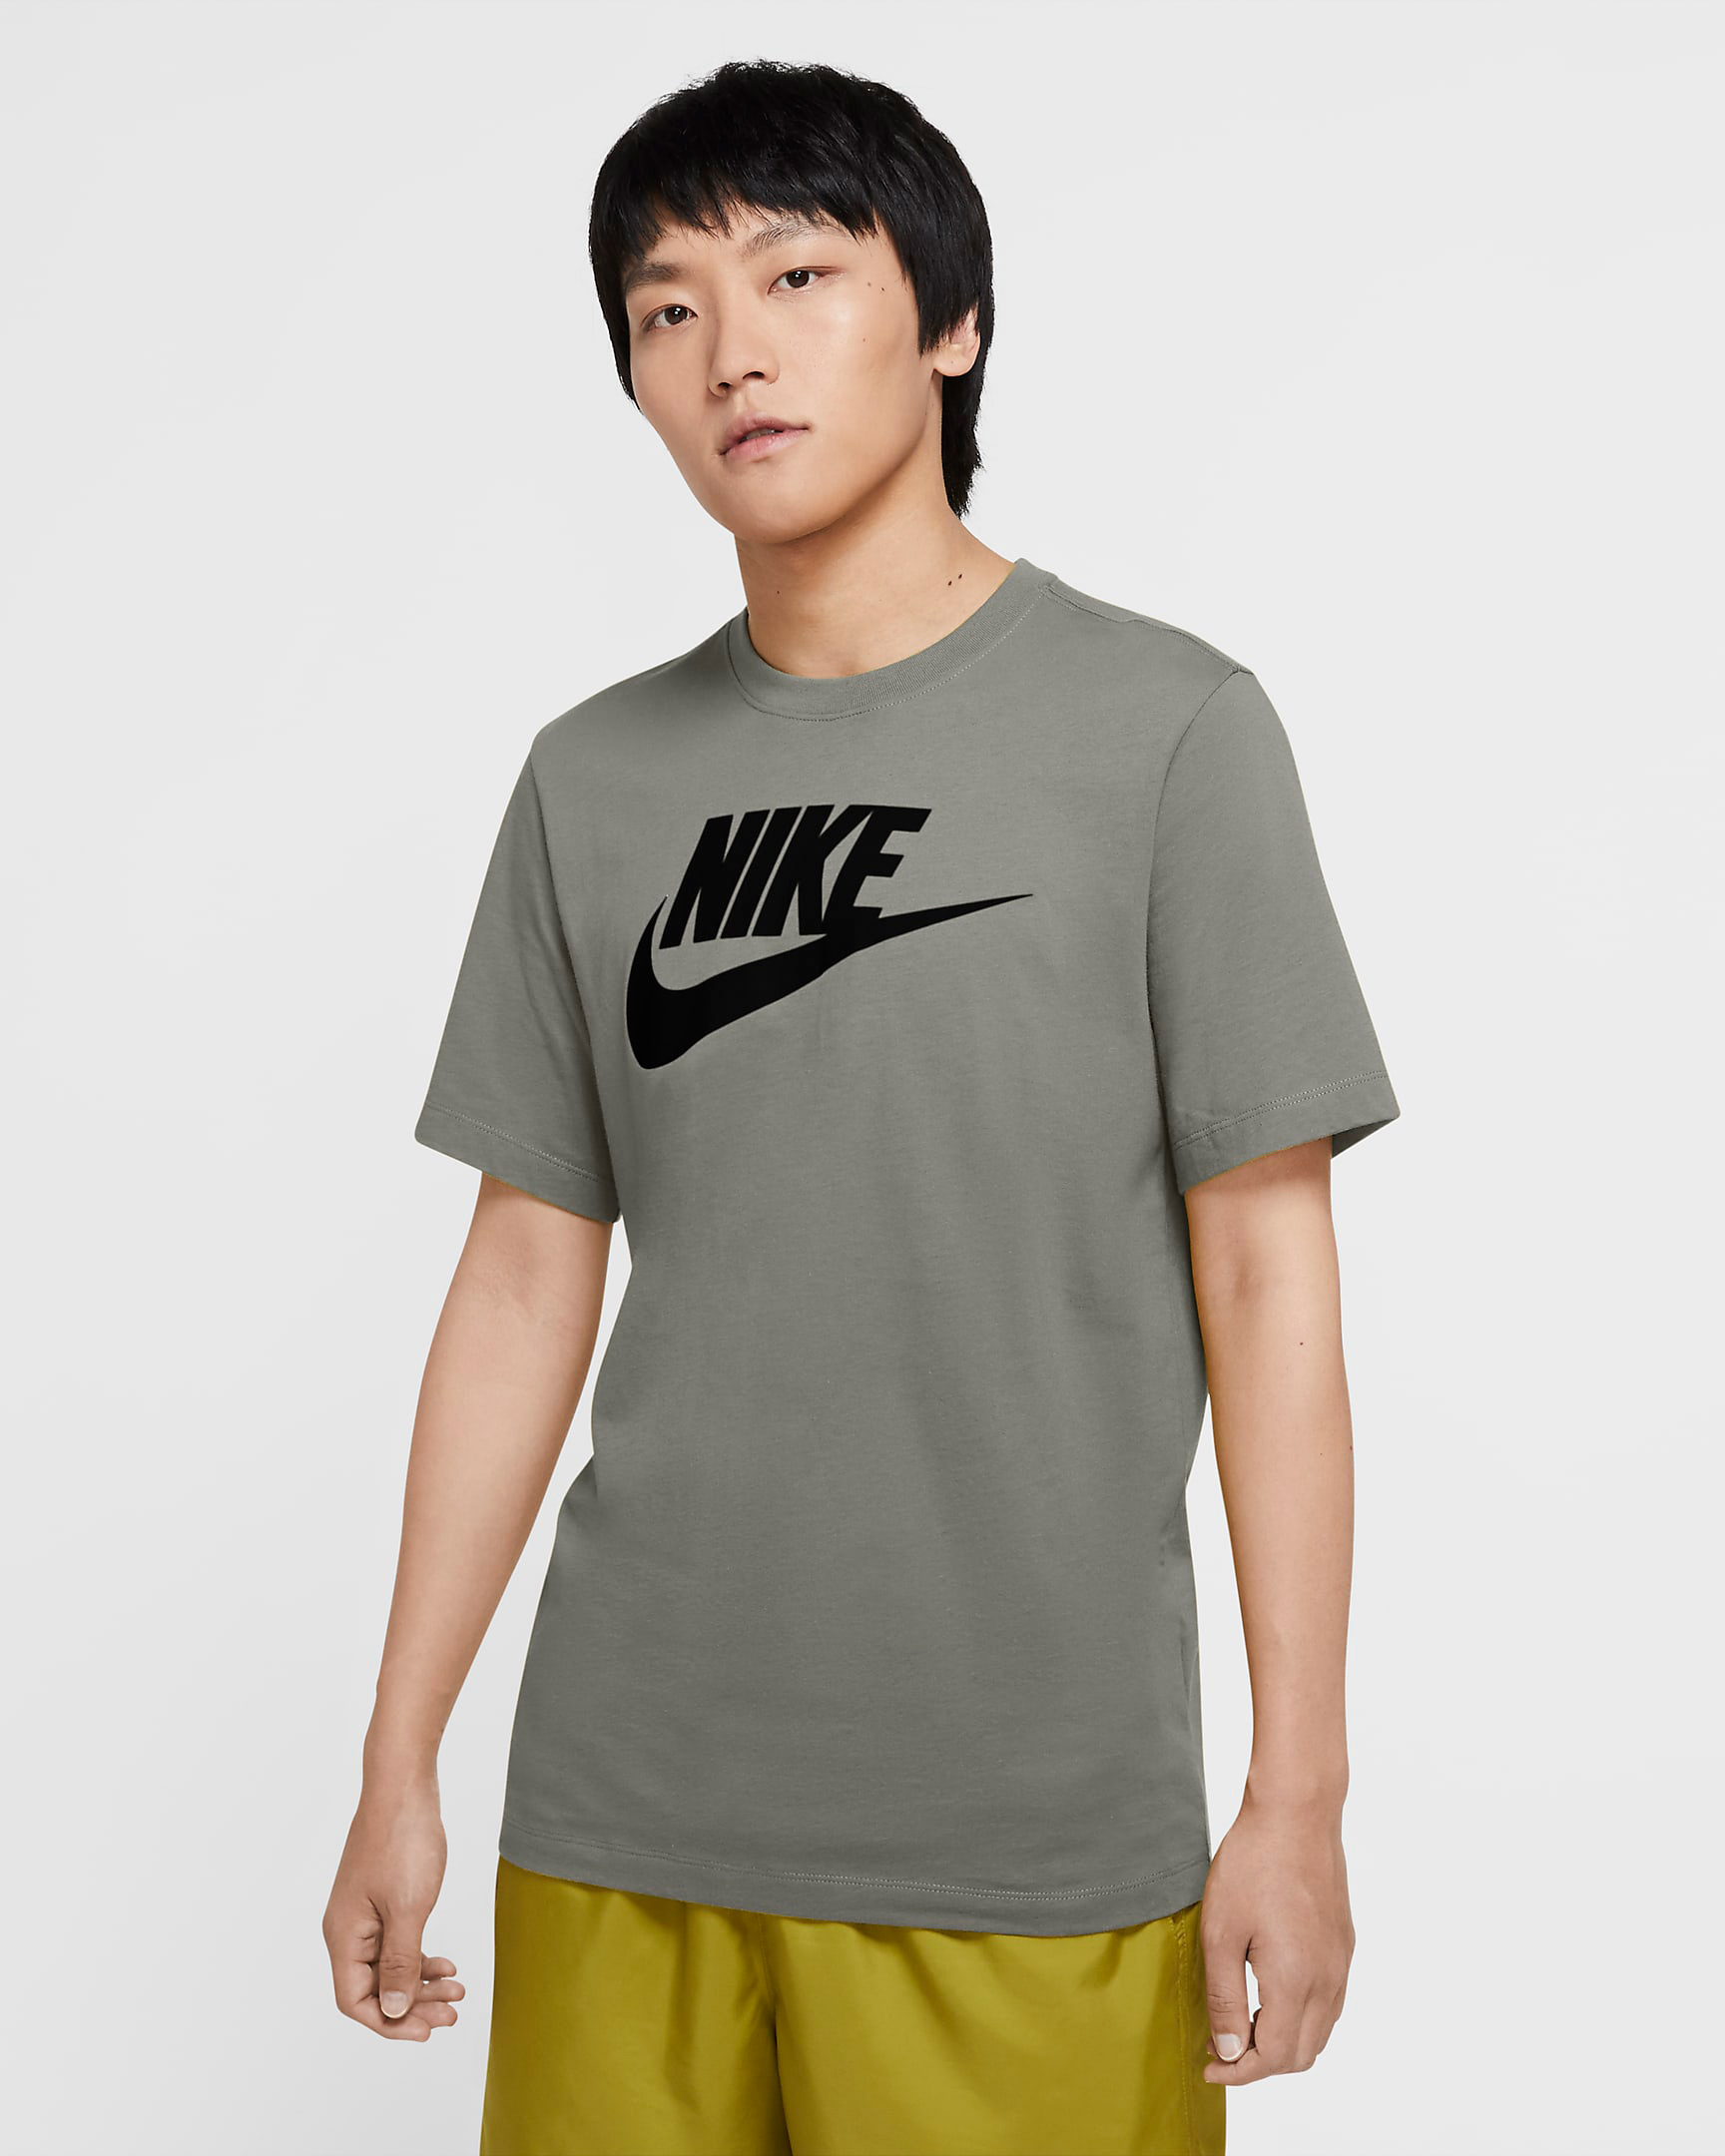 nike-light-army-t-shirt